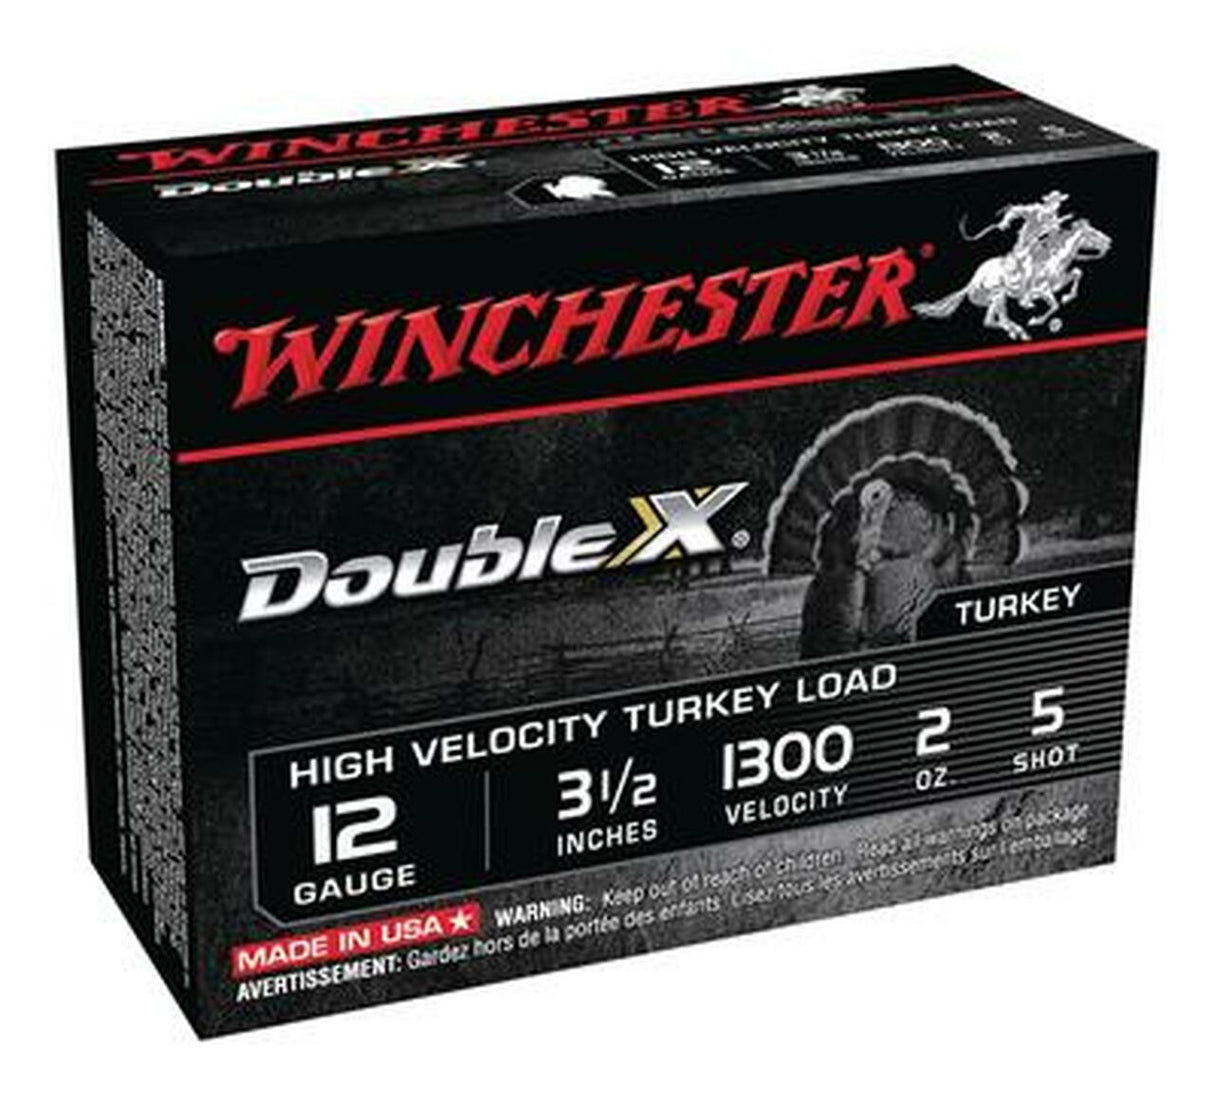 Winchester Double X Cargas de pavo de alta velocidad Chapado en cobre Amortiguado Calibre 12 3.5" 1300 FPS 2oz. 5 disparos